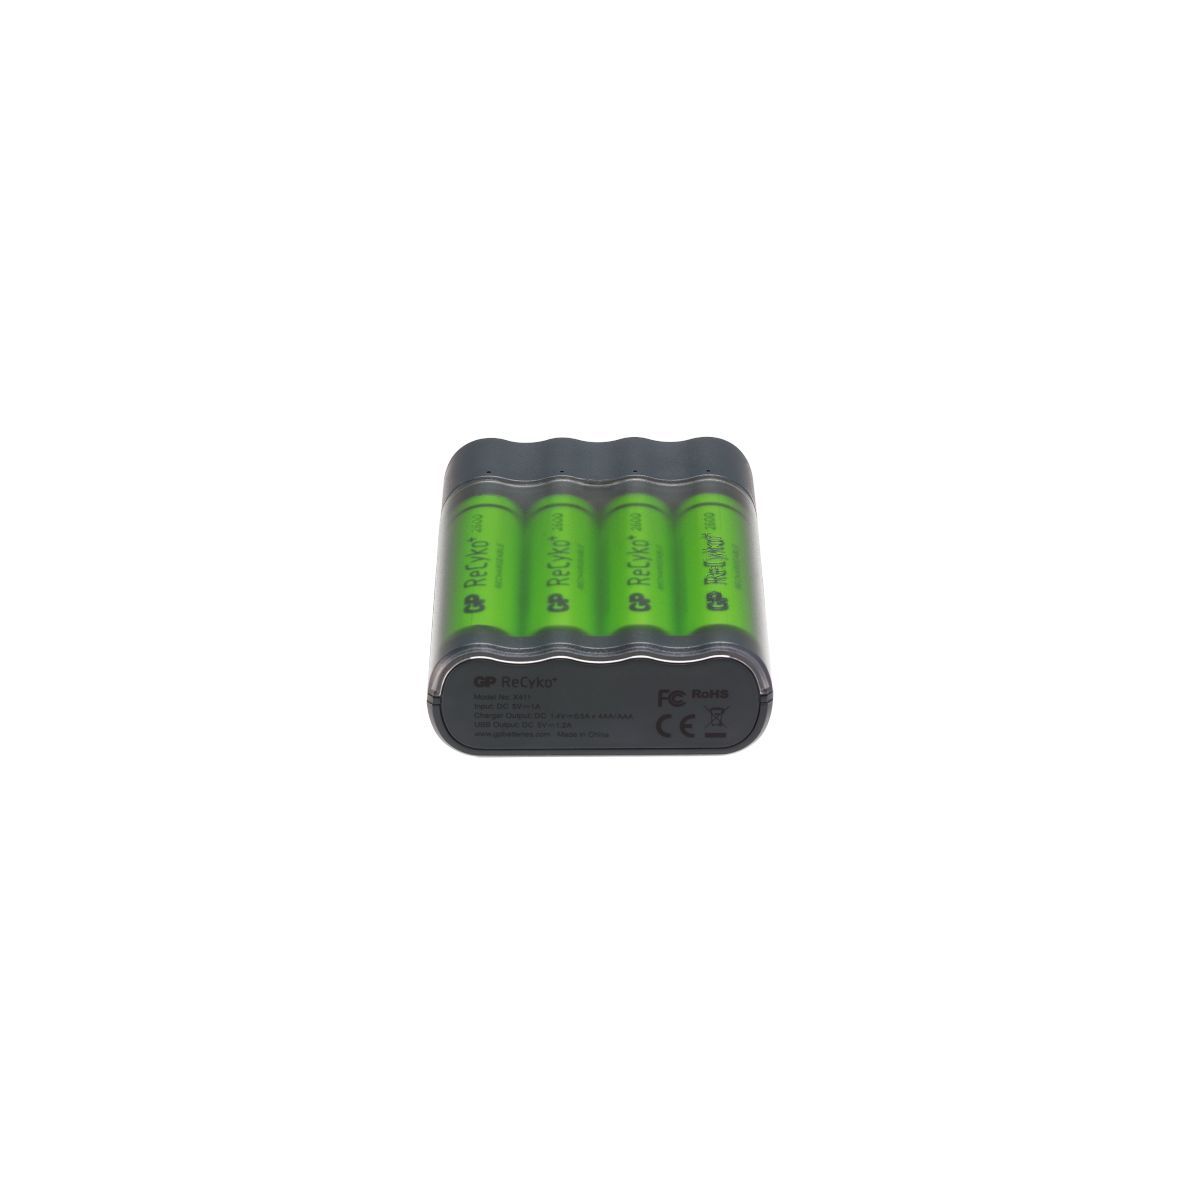 4 piles AA rechargeables par câble micro USB, Accus AAA / LR03